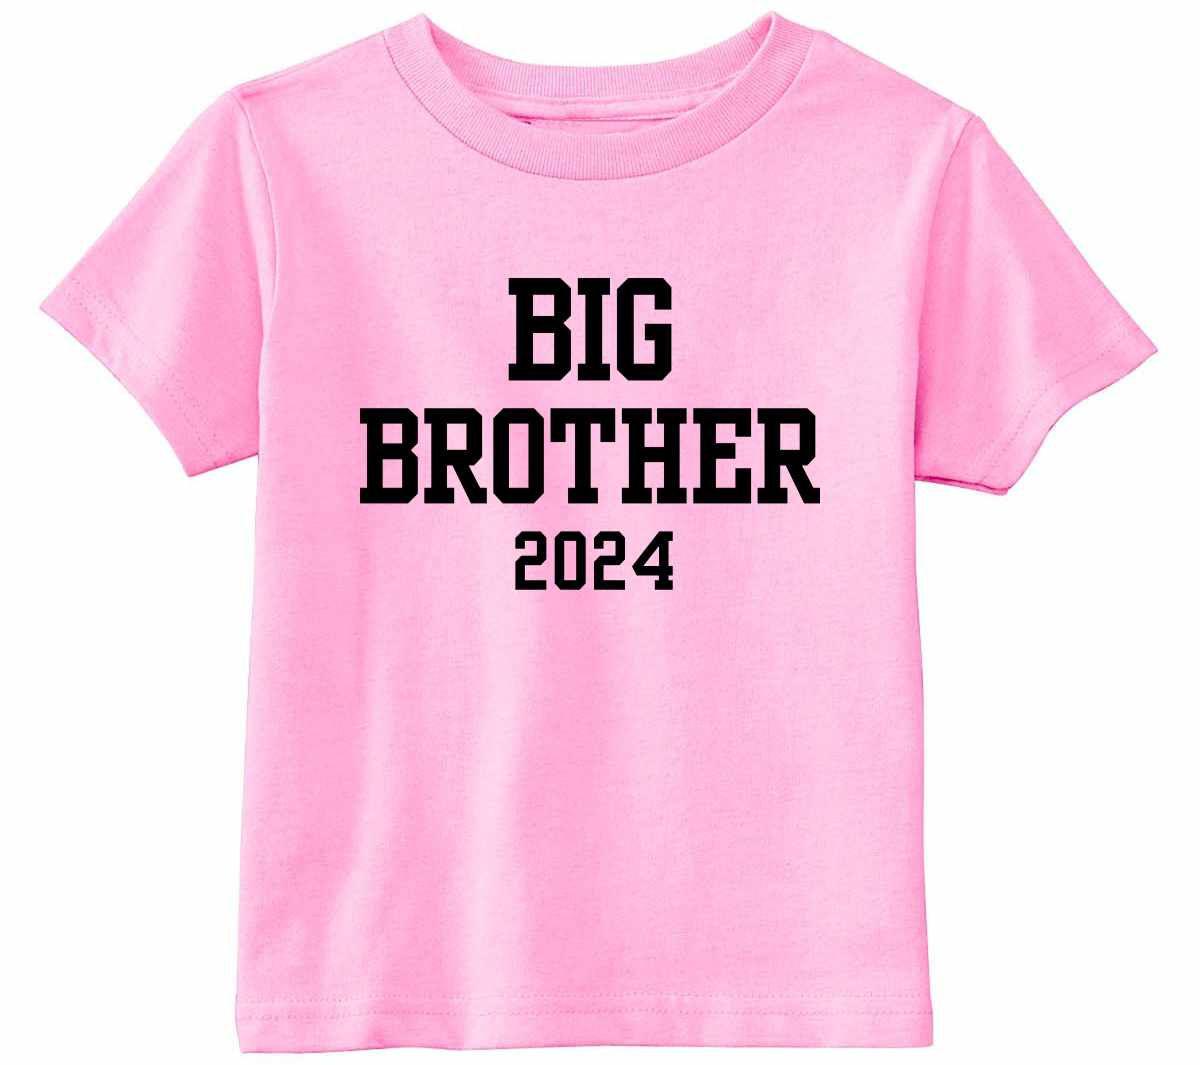 Big Brother 2024 on Infant-Toddler T-Shirt (#1392-7)